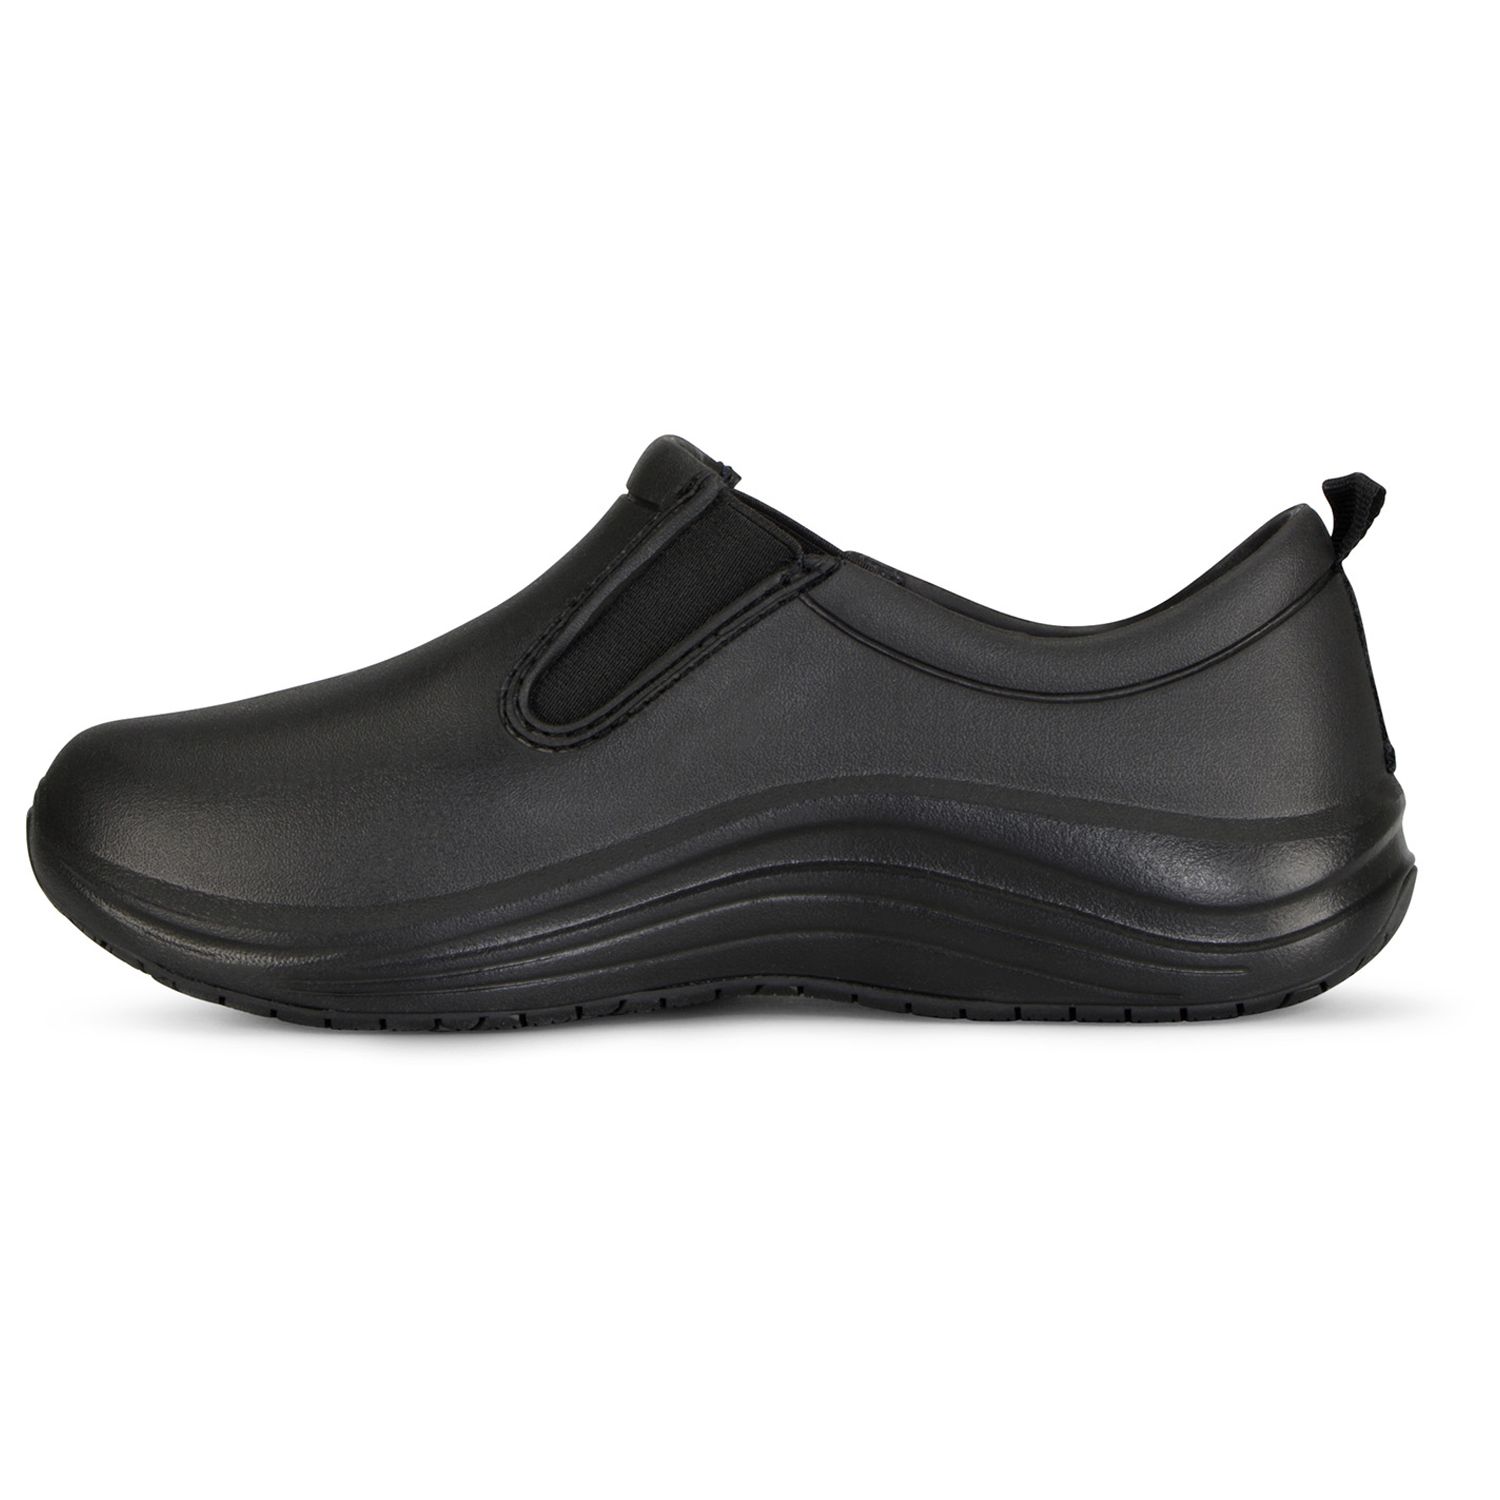 emeril quarter women's water resistant work shoes